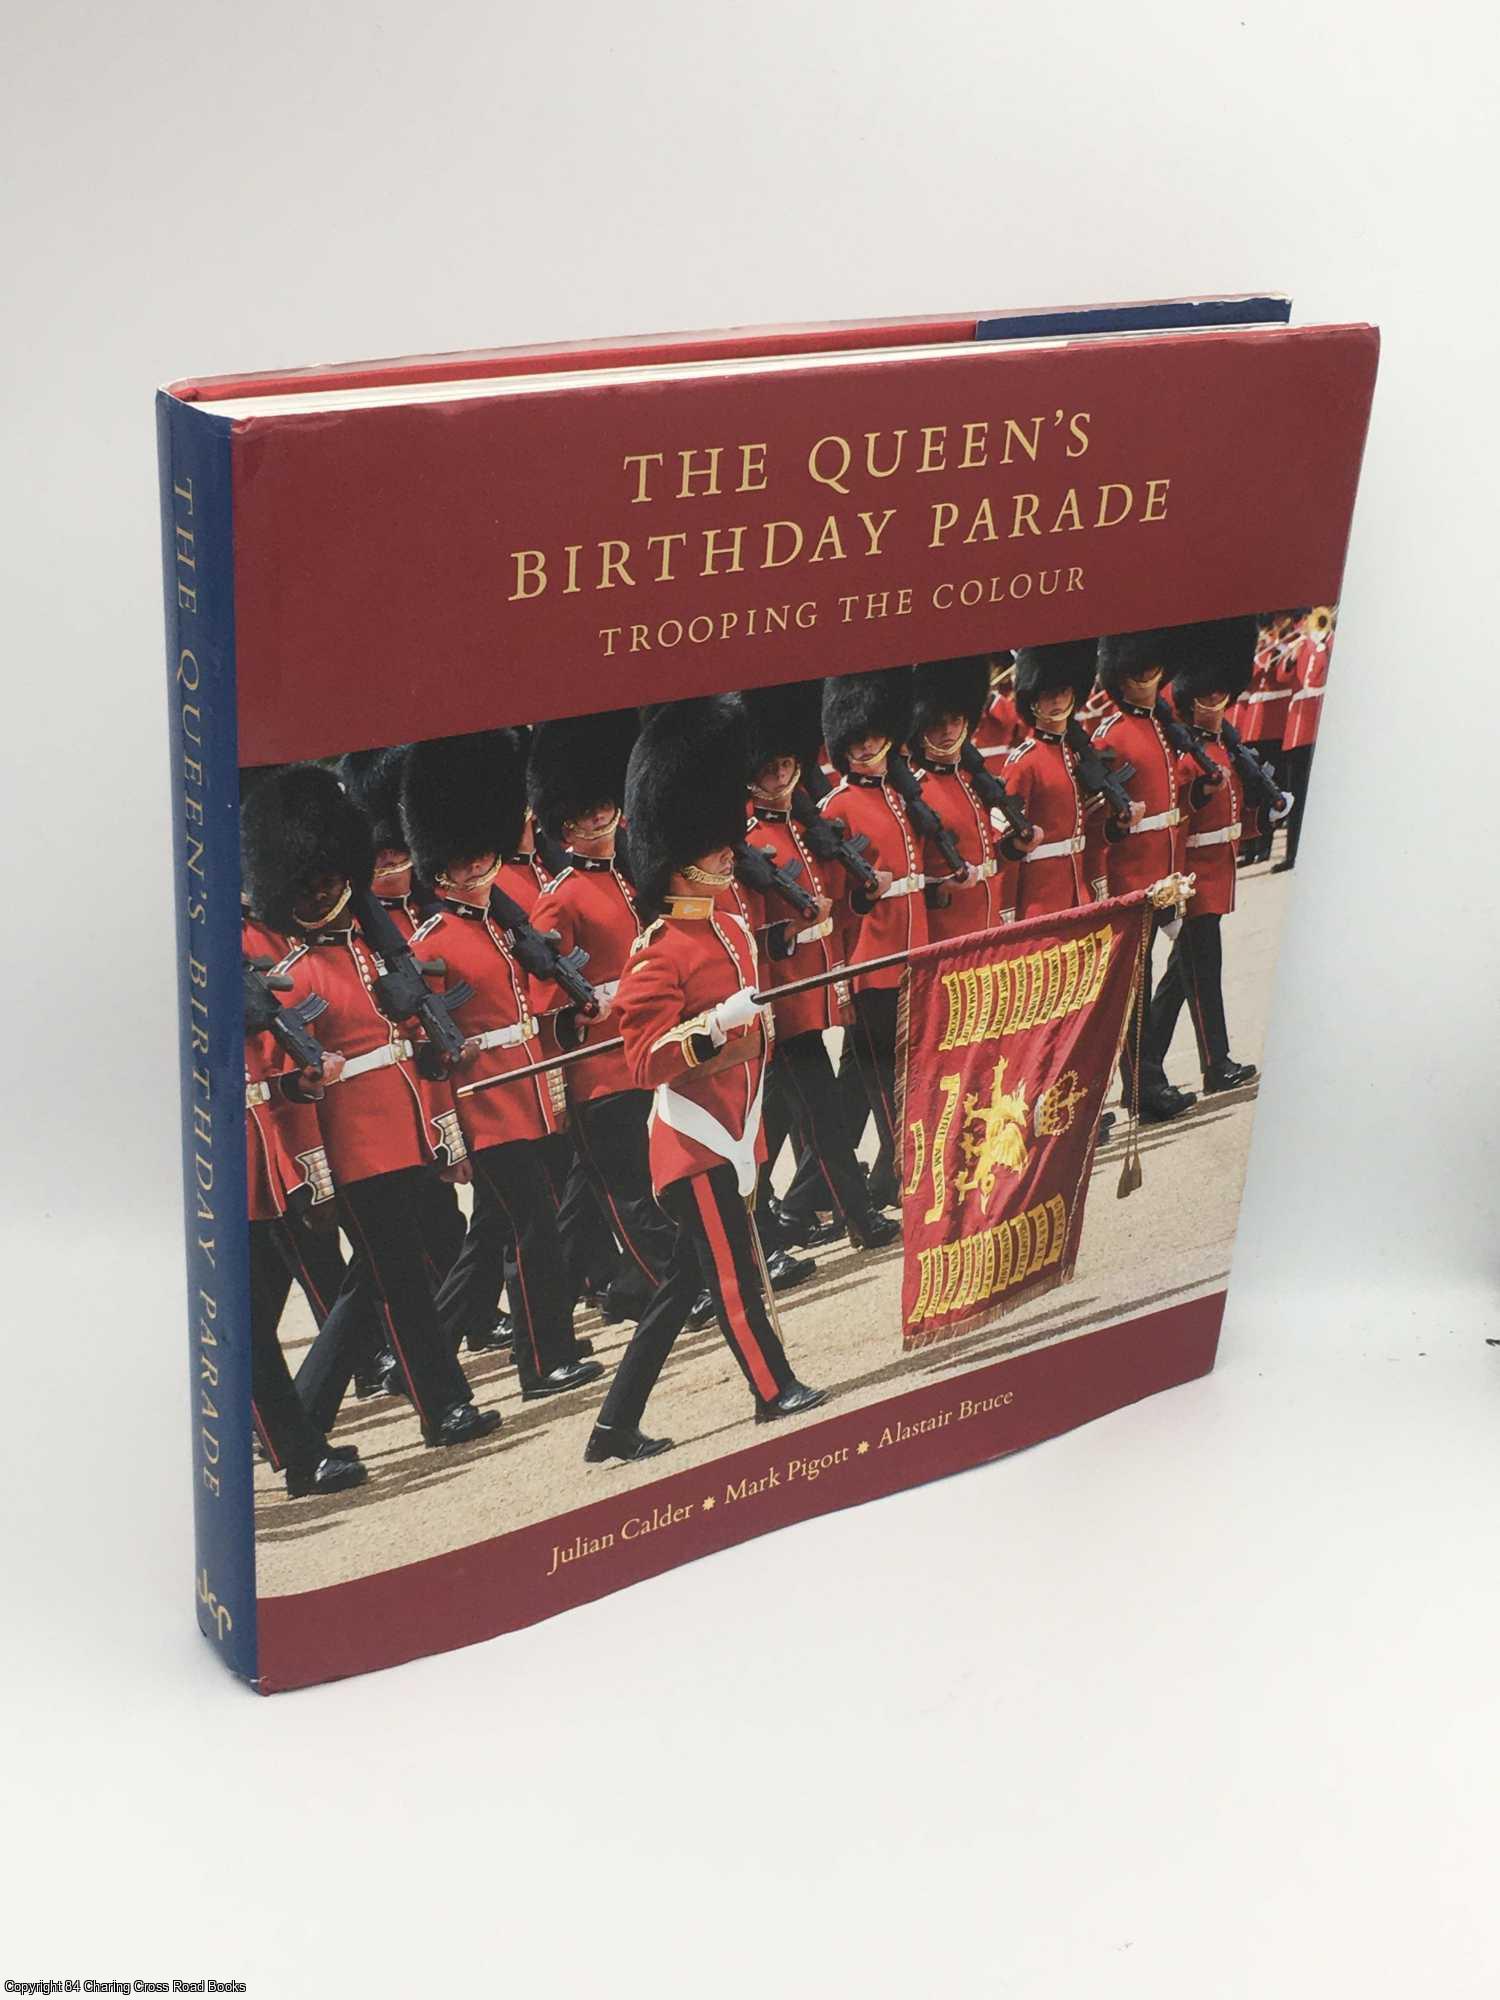 Calder, Julian - The Queen's Birthday Parade: Trooping the Colour